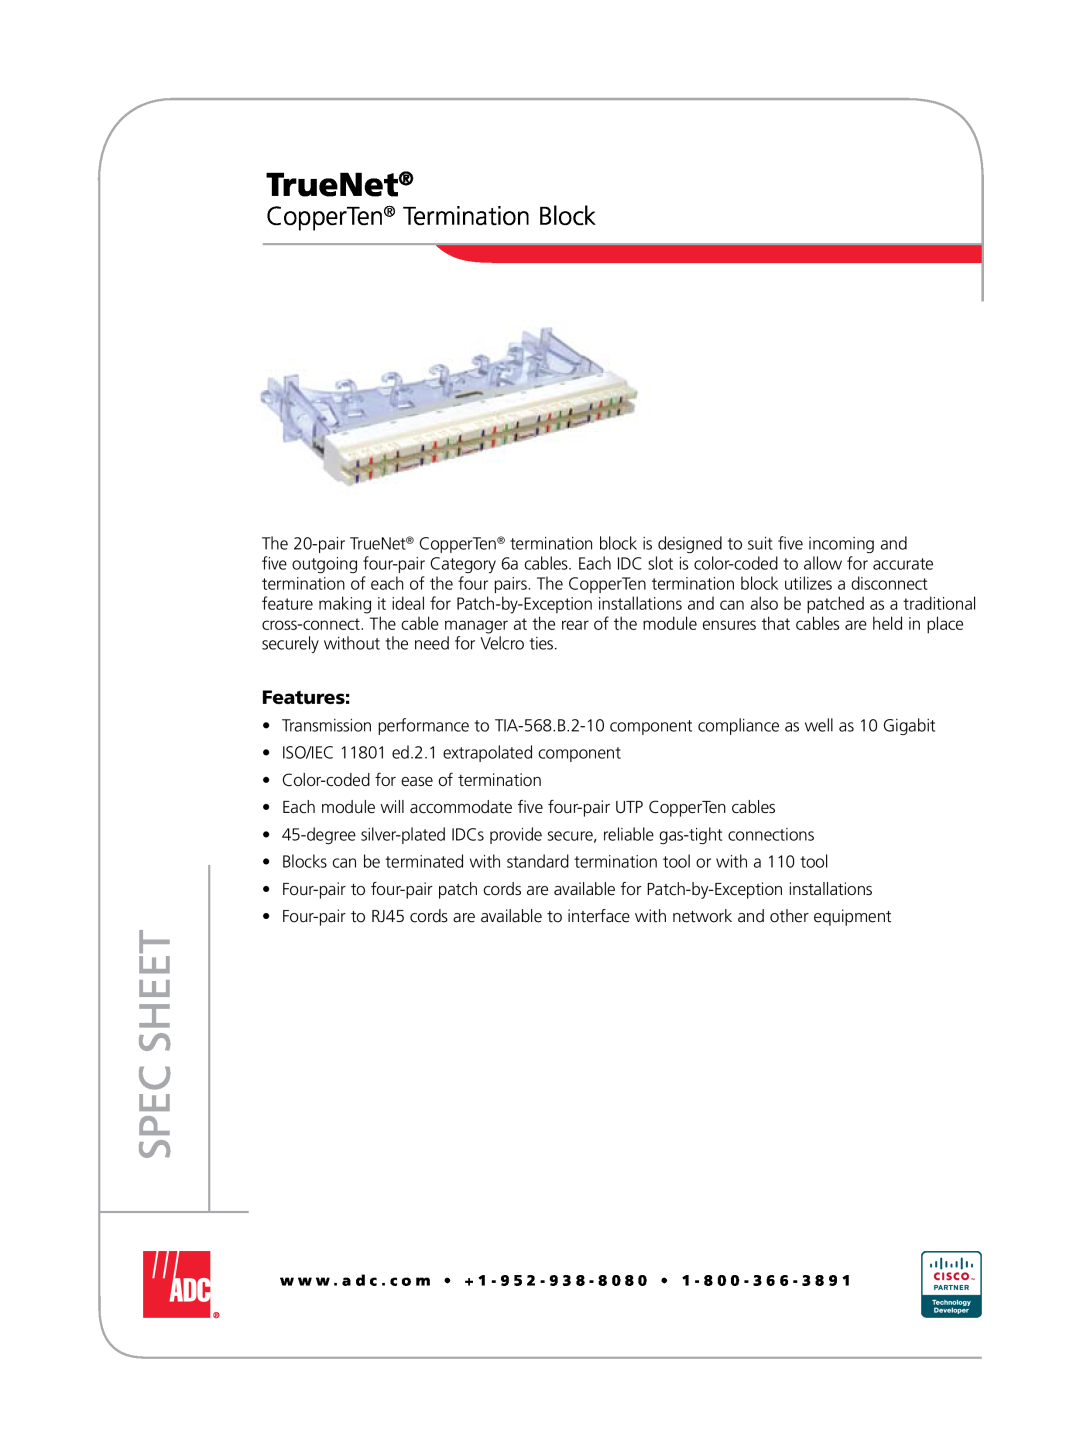 ADC manual TrueNet, CopperTen Termination Block, Spec Sheet, Features 